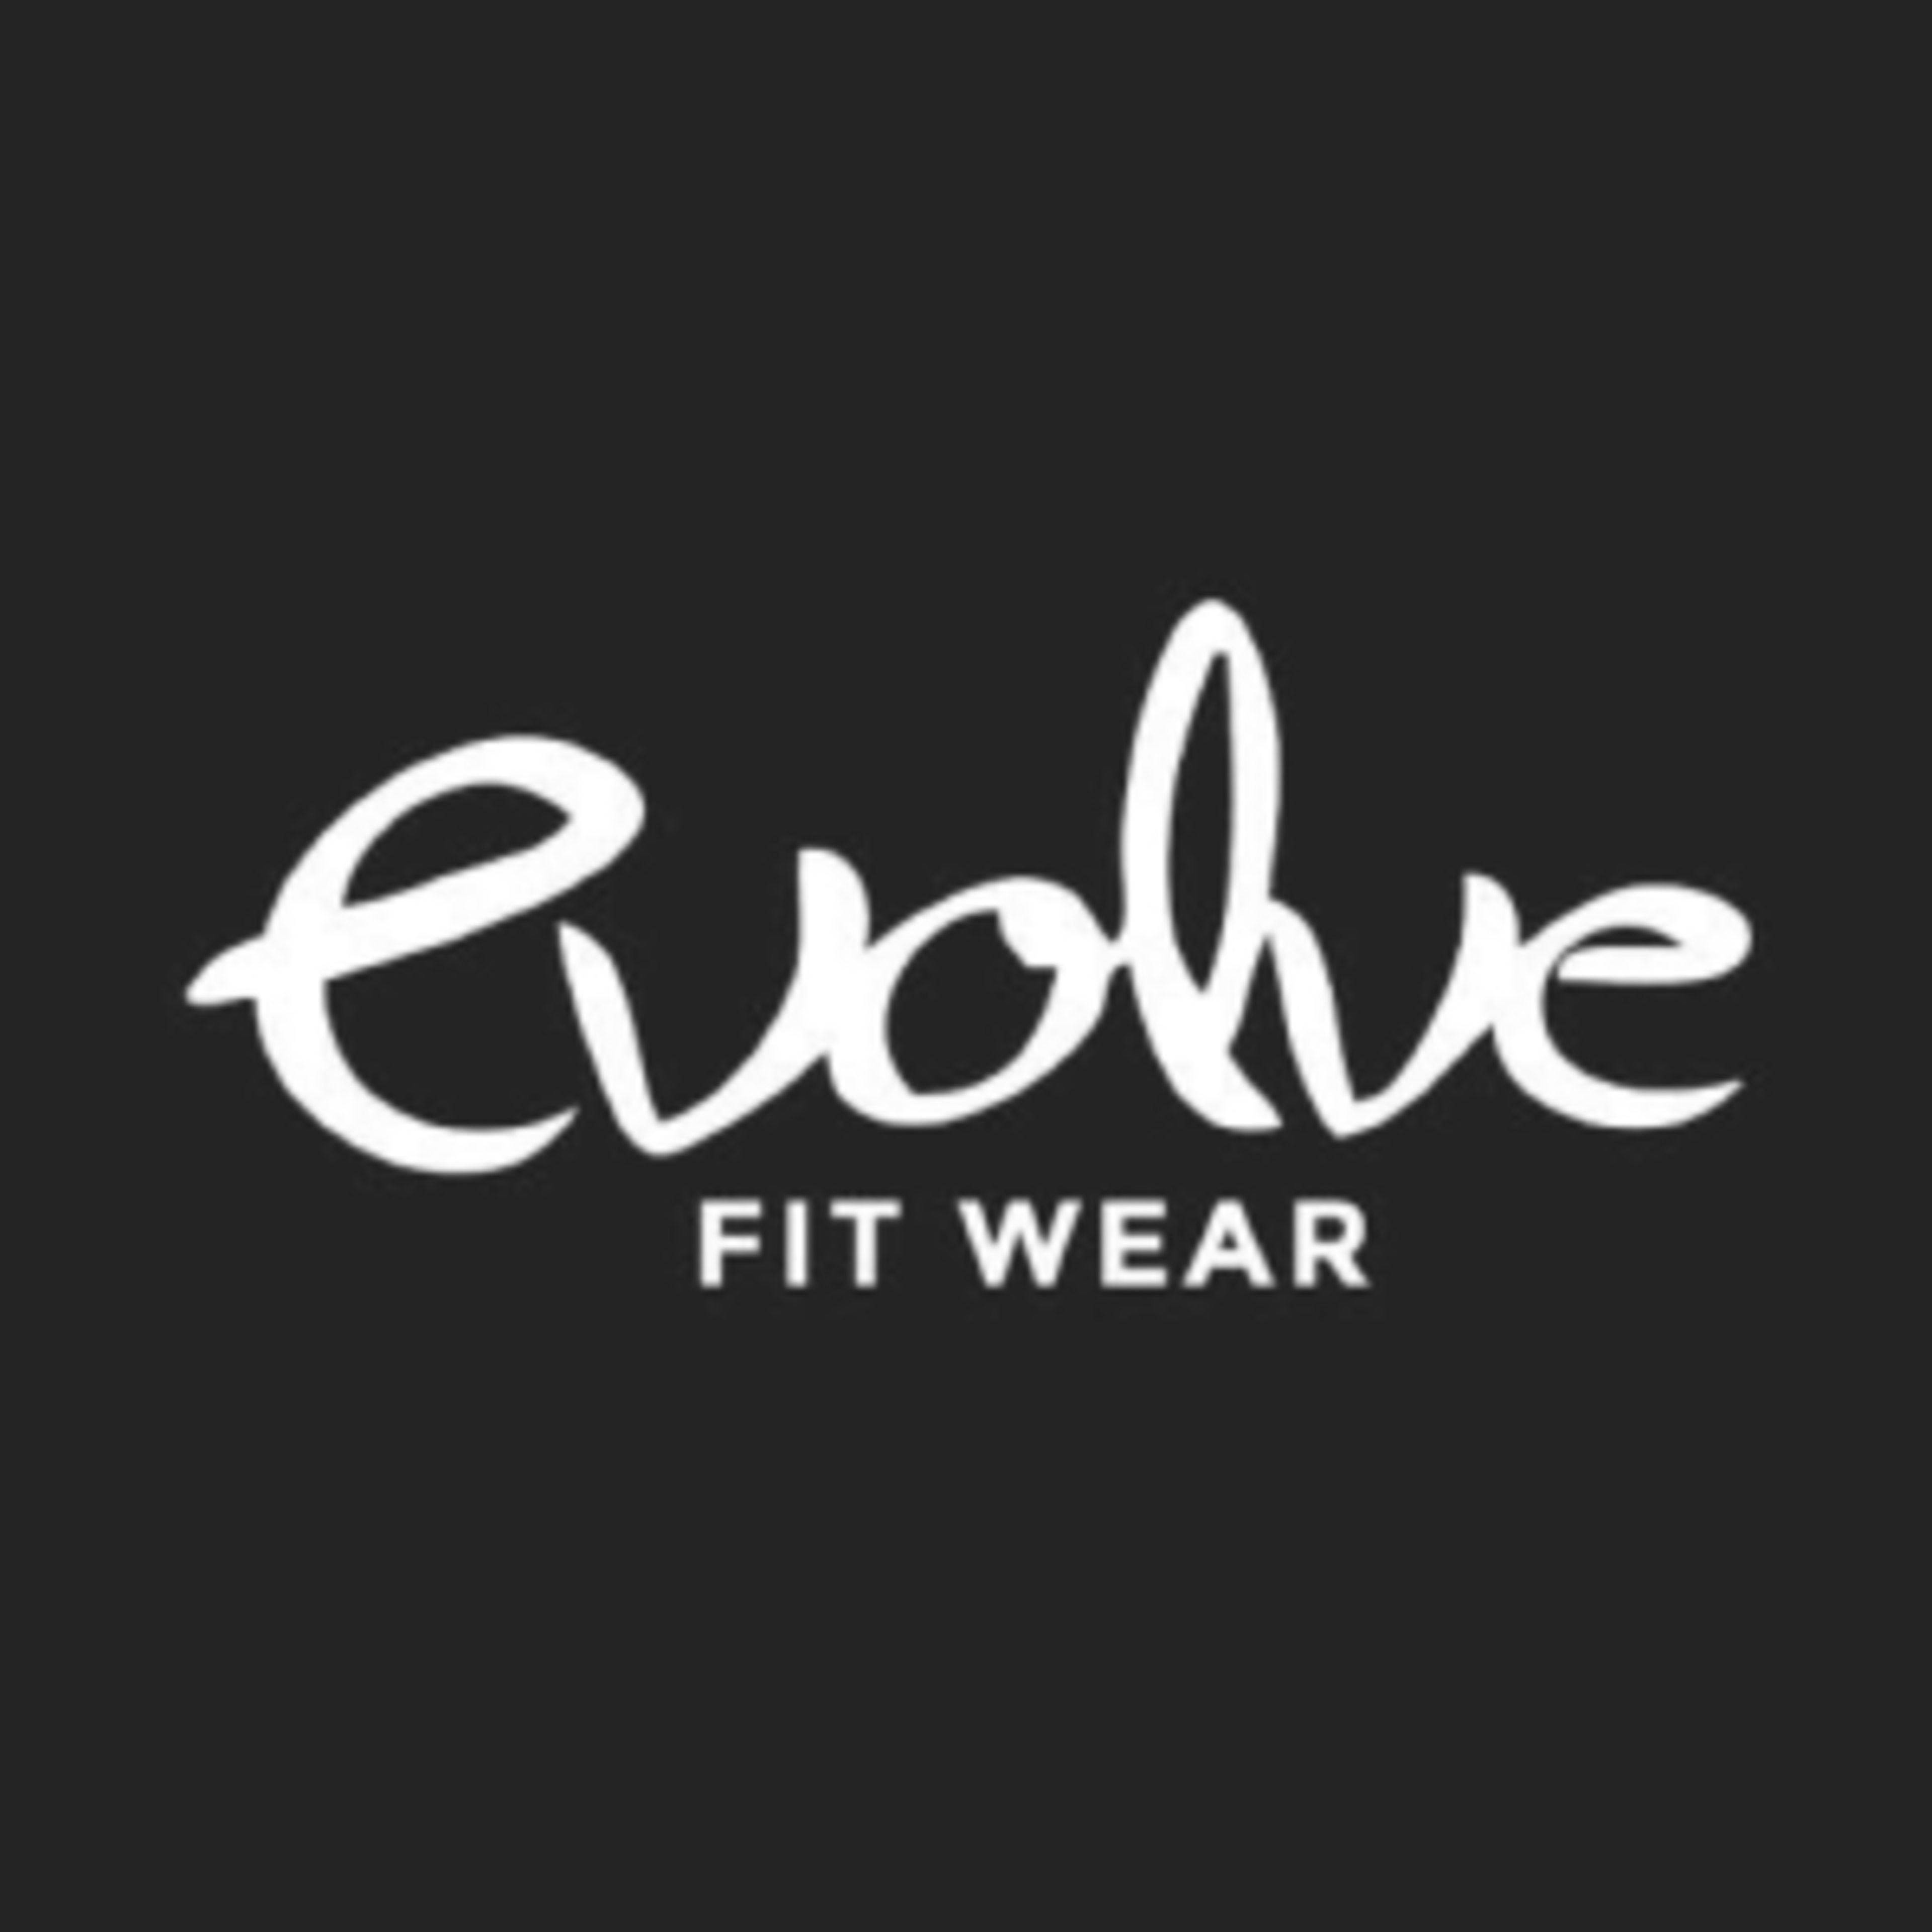 Evolve Fit Wear Code